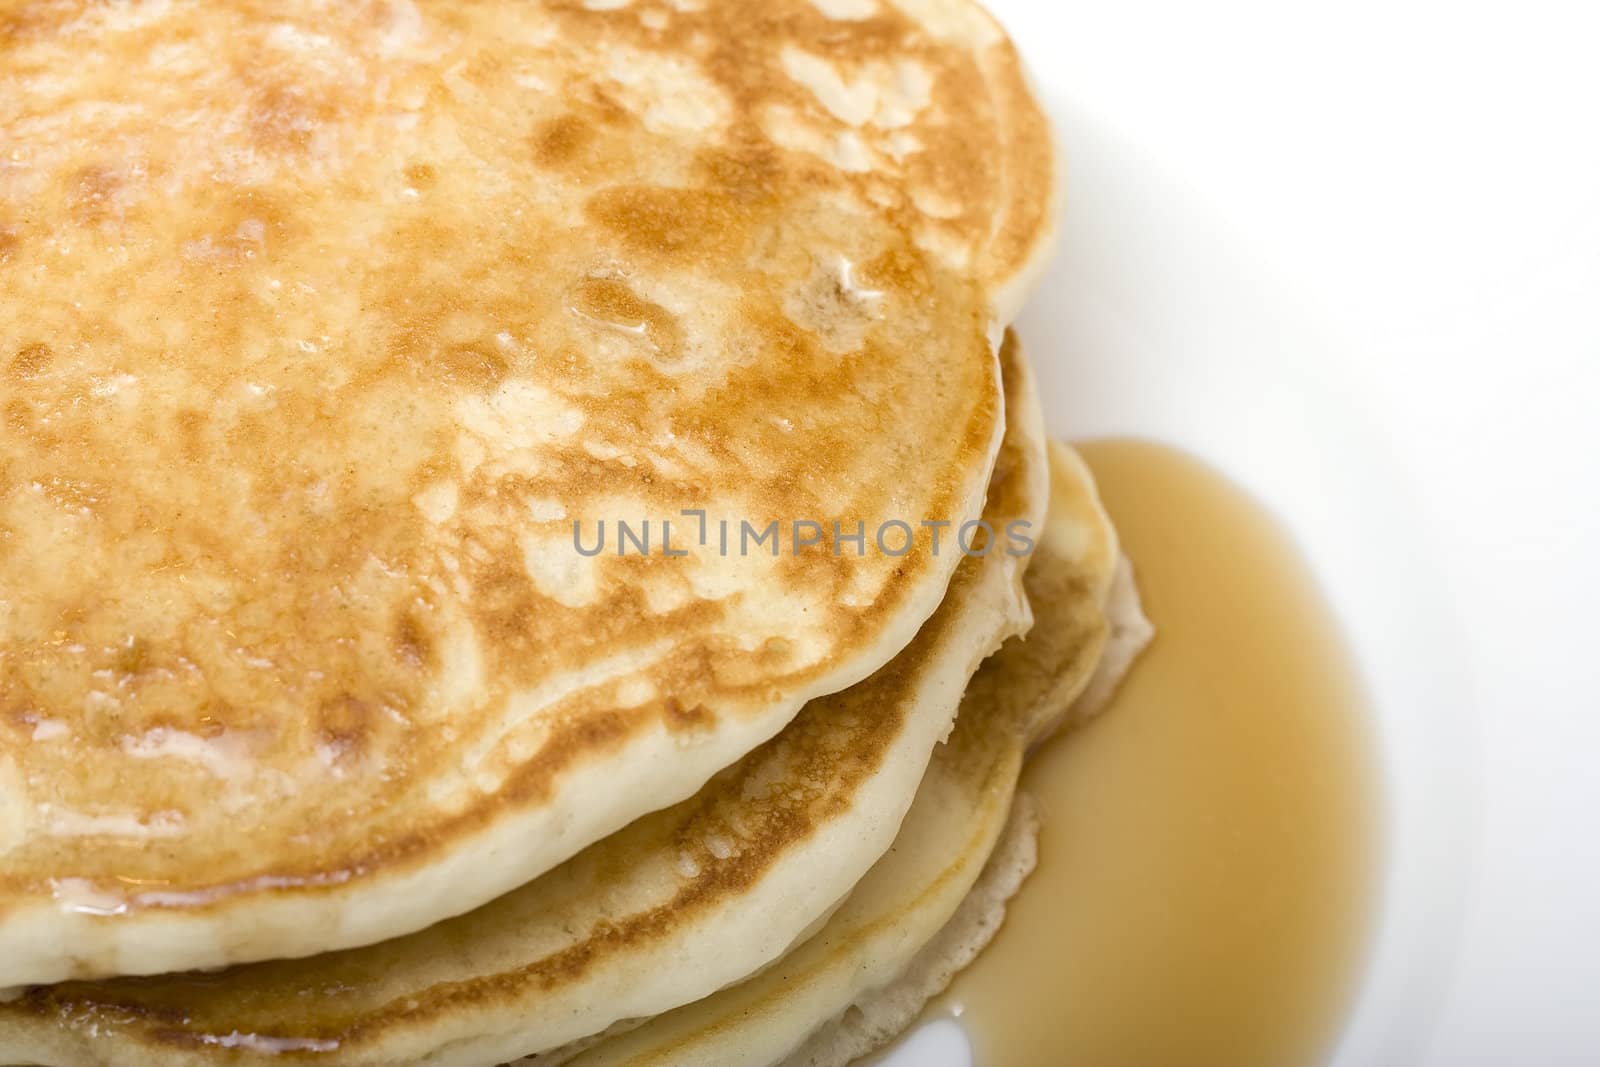 pancakes by snokid